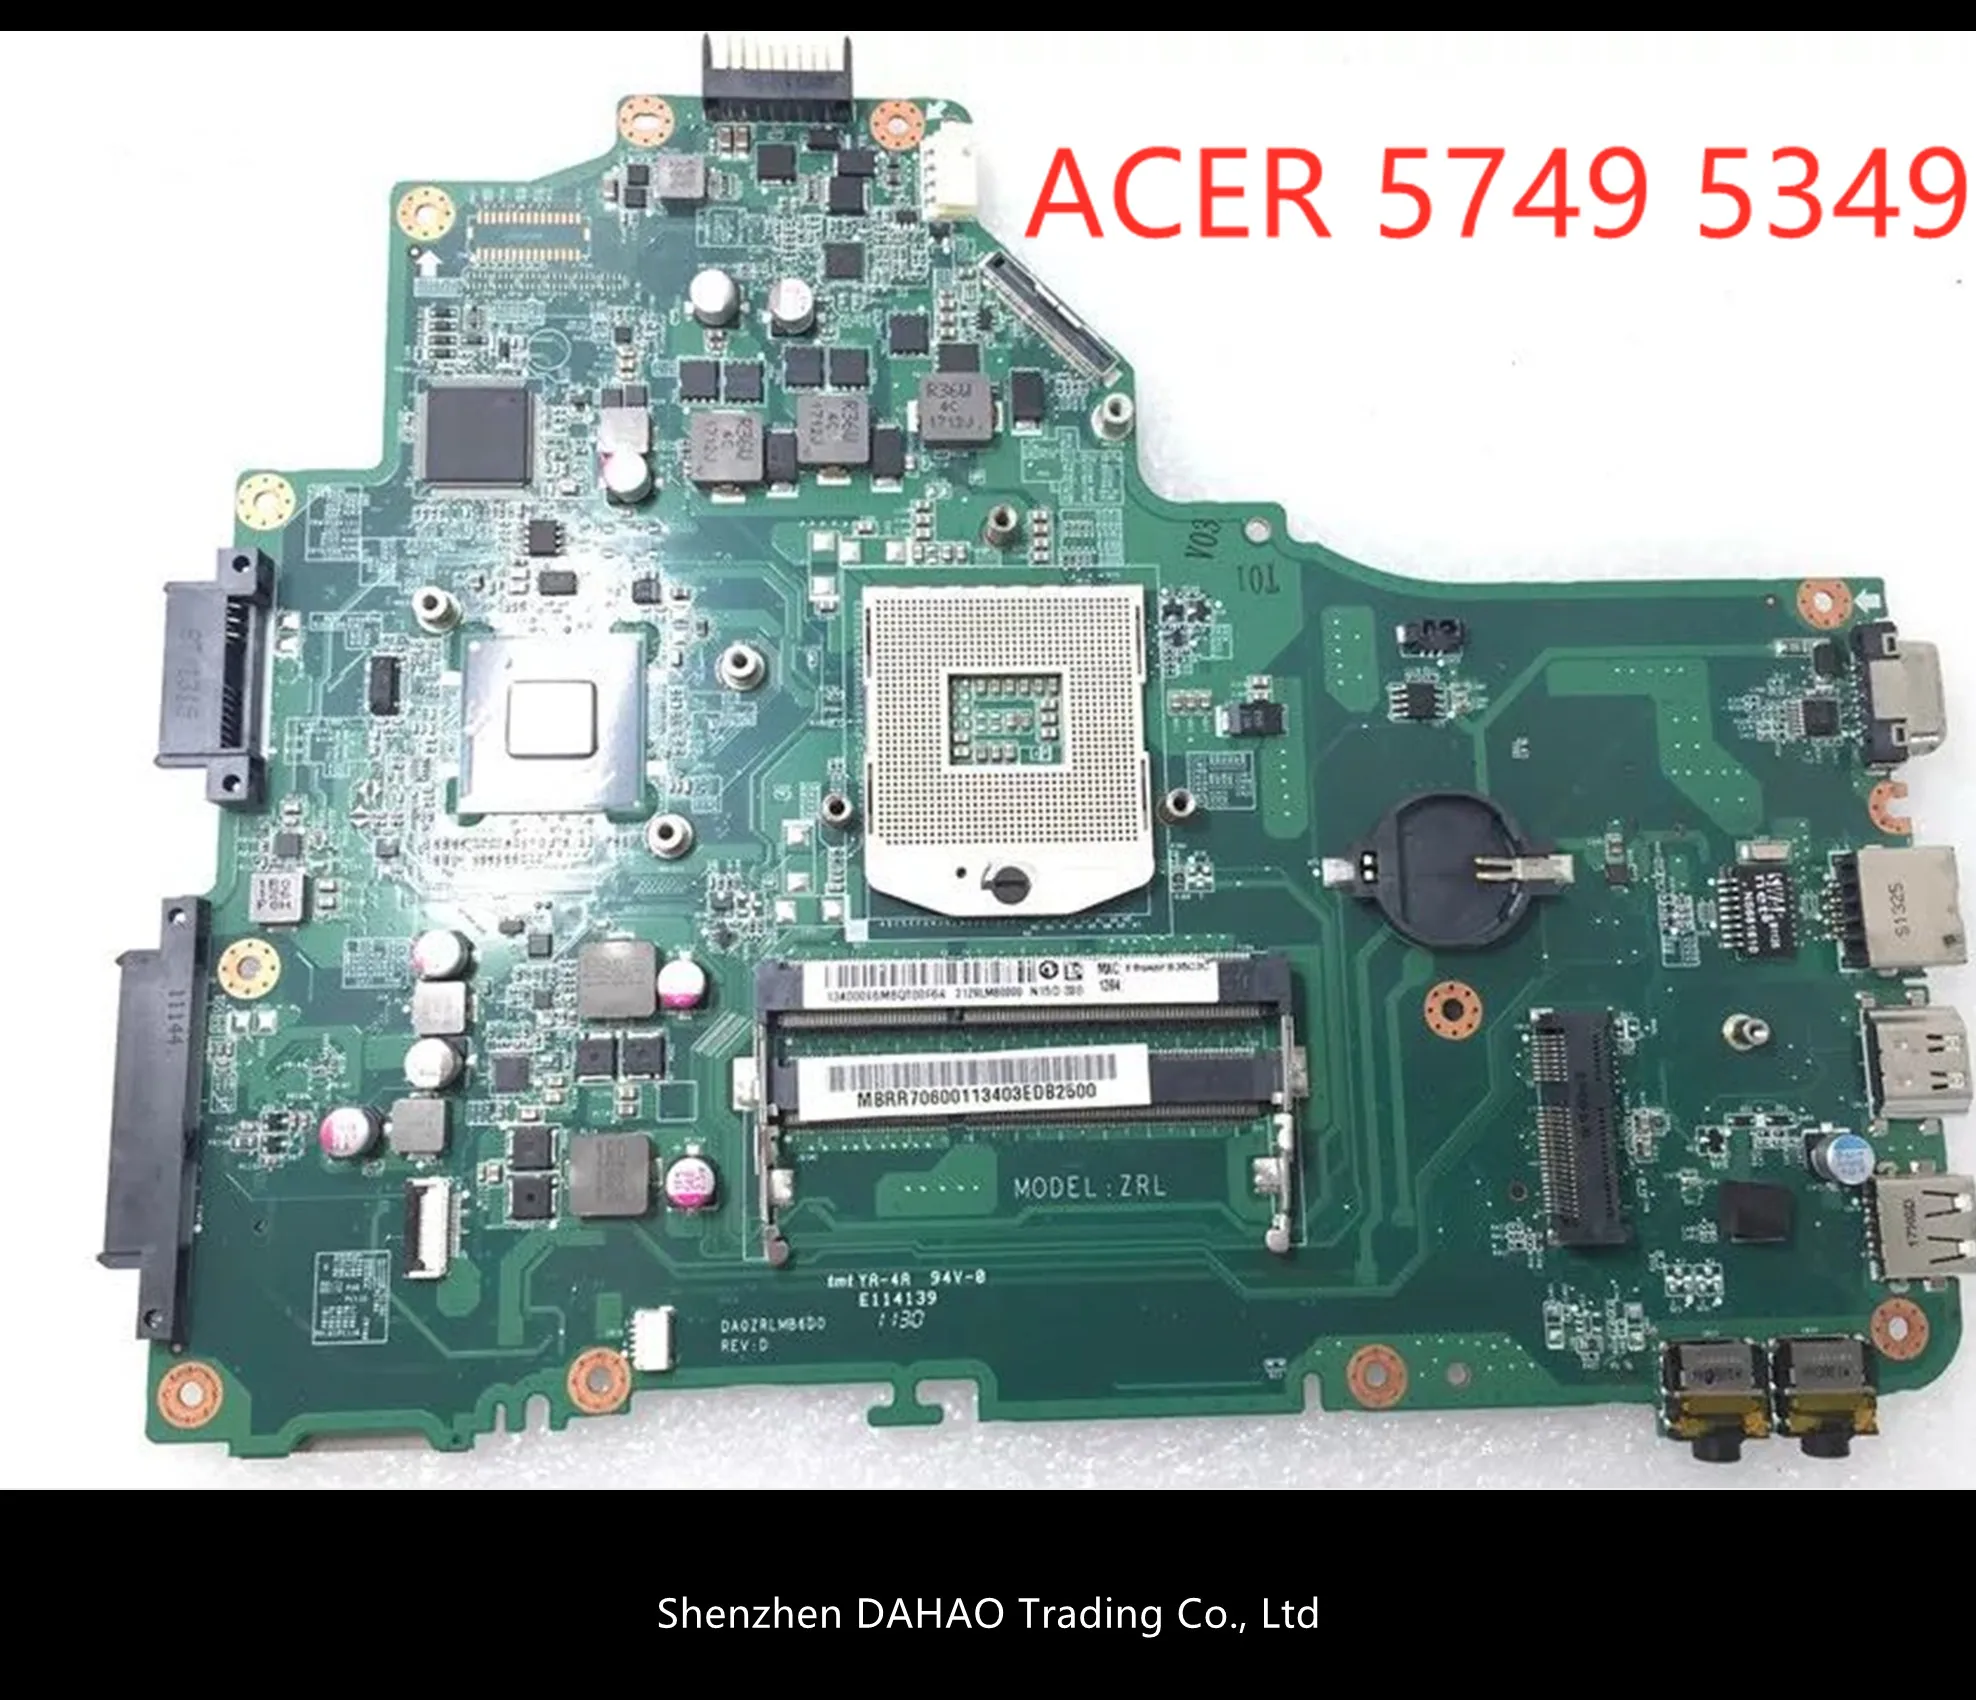 

Shenzhen DAHAO Trading Co., Ltd For Acer Aspire 5749 5349 Motherboard DA0ZRLMB6D0